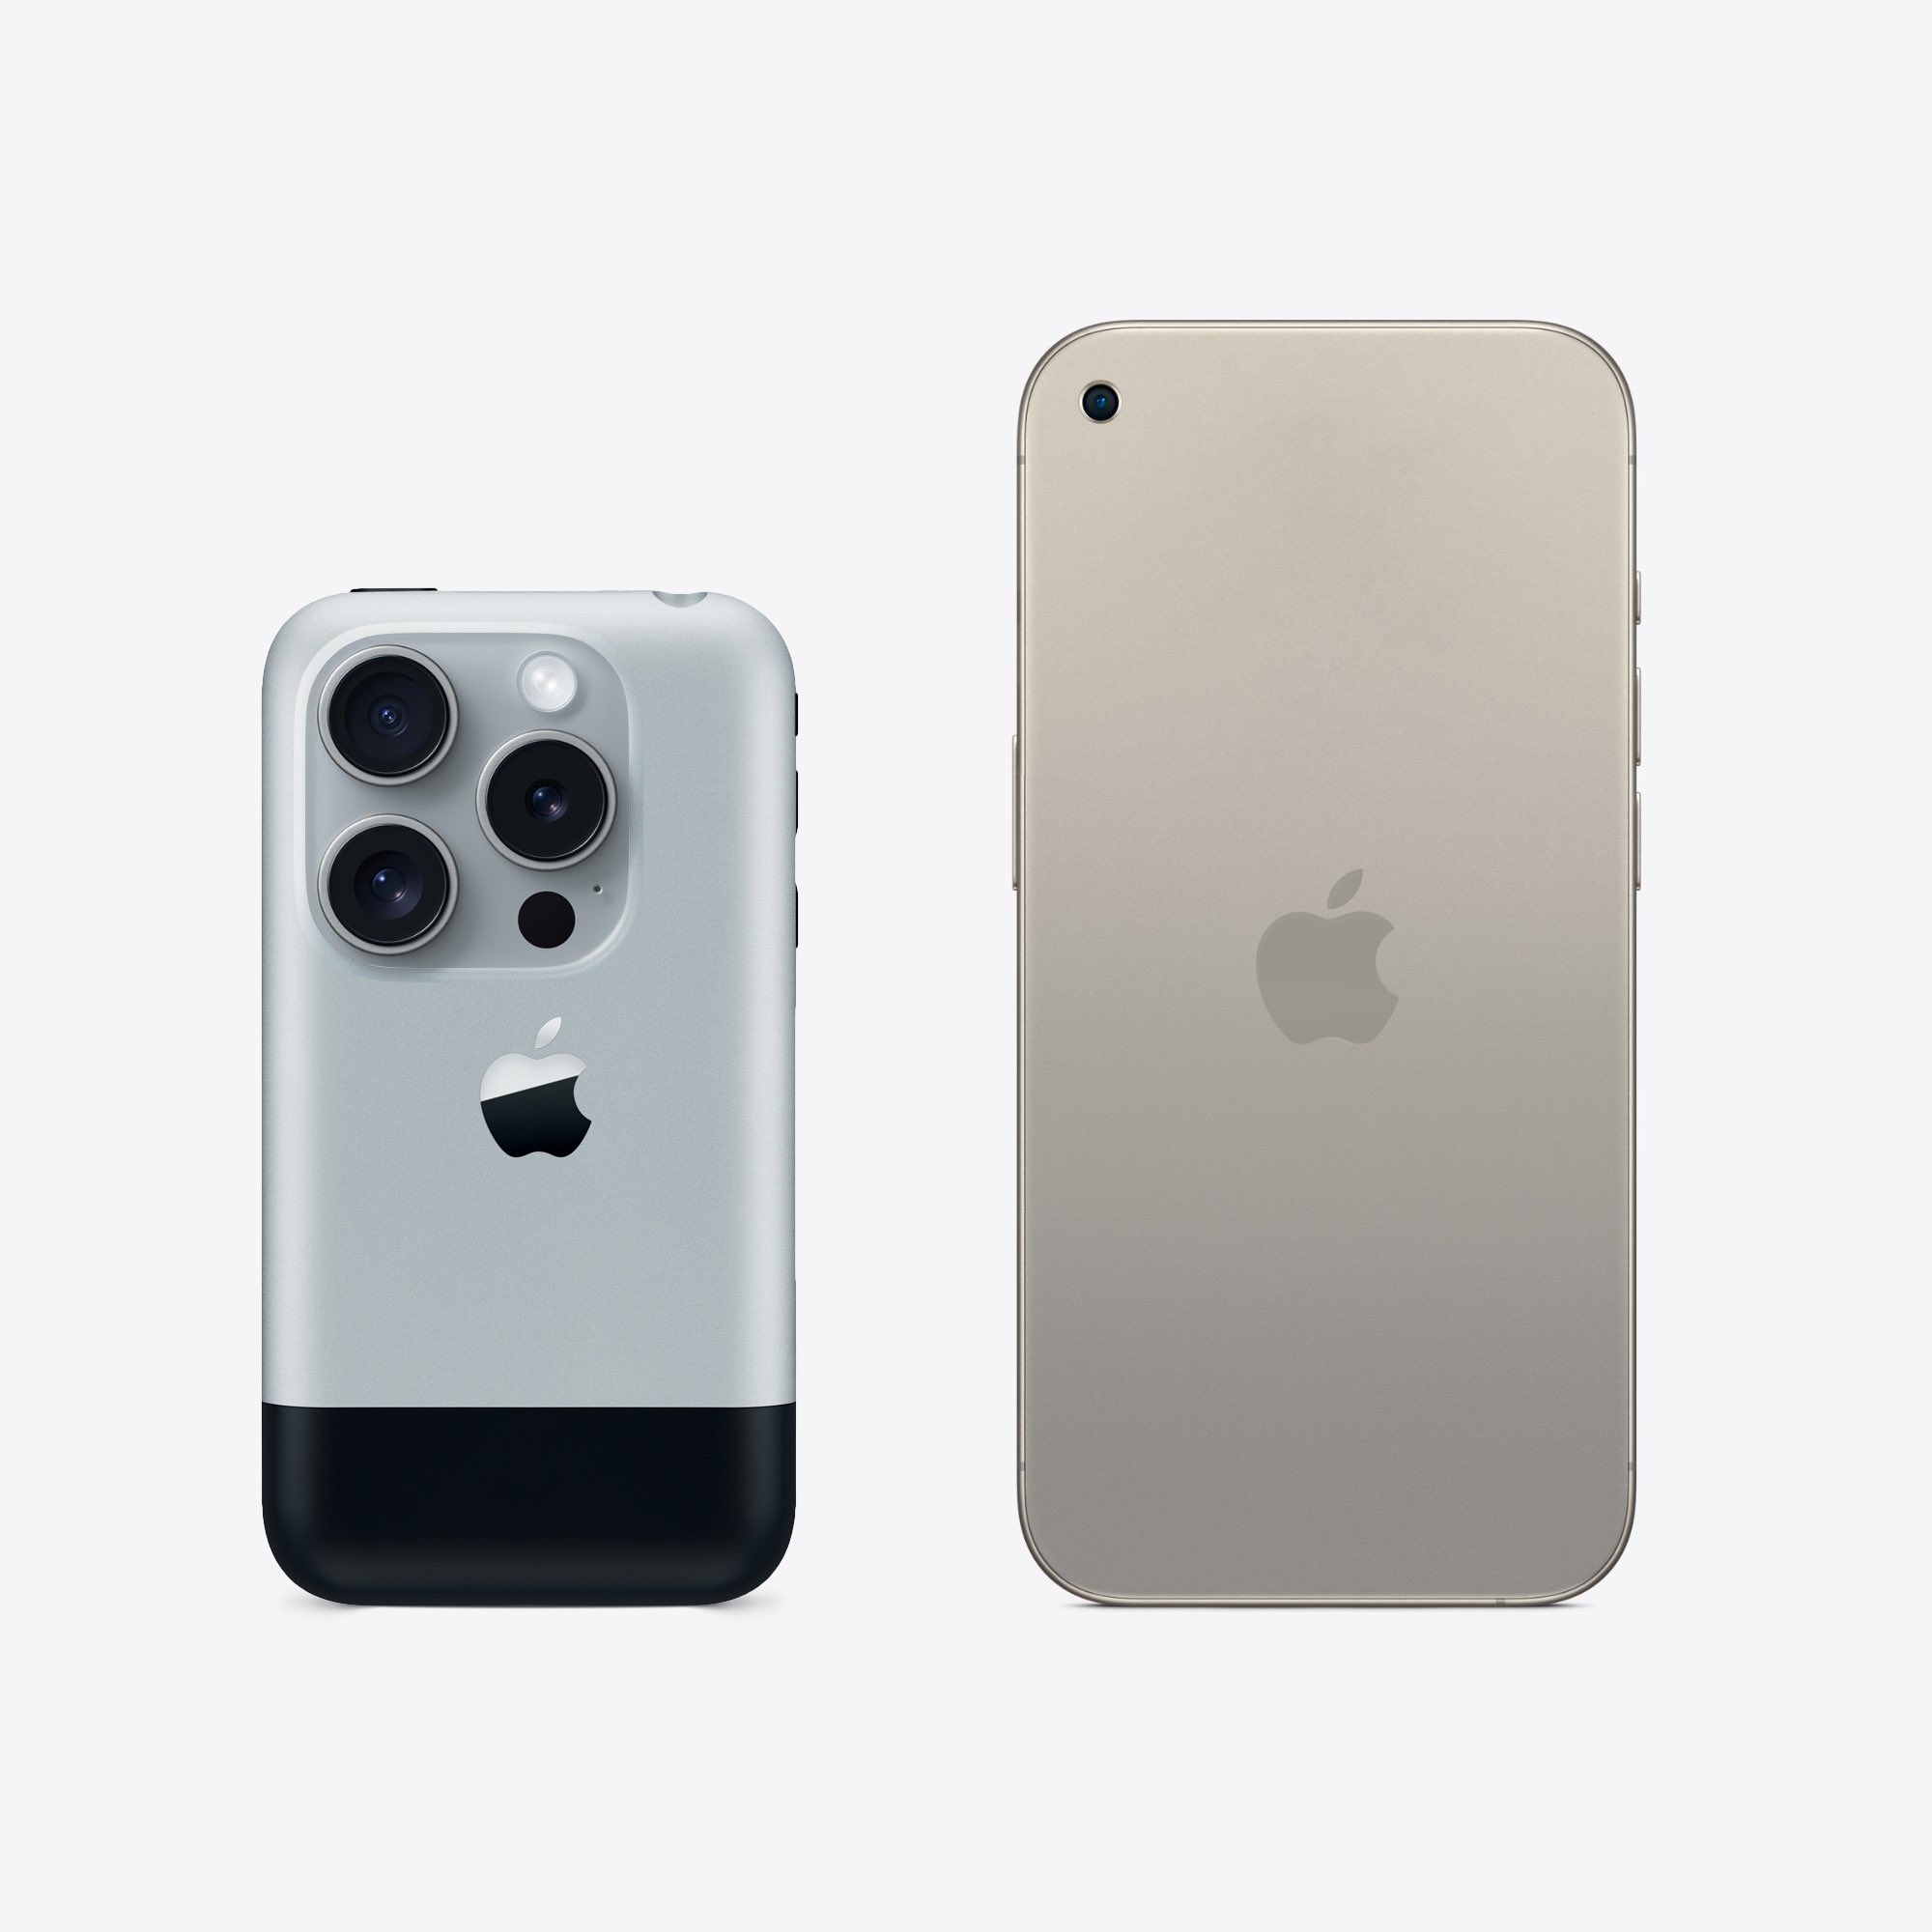 Basic Apple Guy on X: "Camera swap (iPhone &amp; iPhone 15 Pro) 📱  https://t.co/PhkFbrWcej" / X